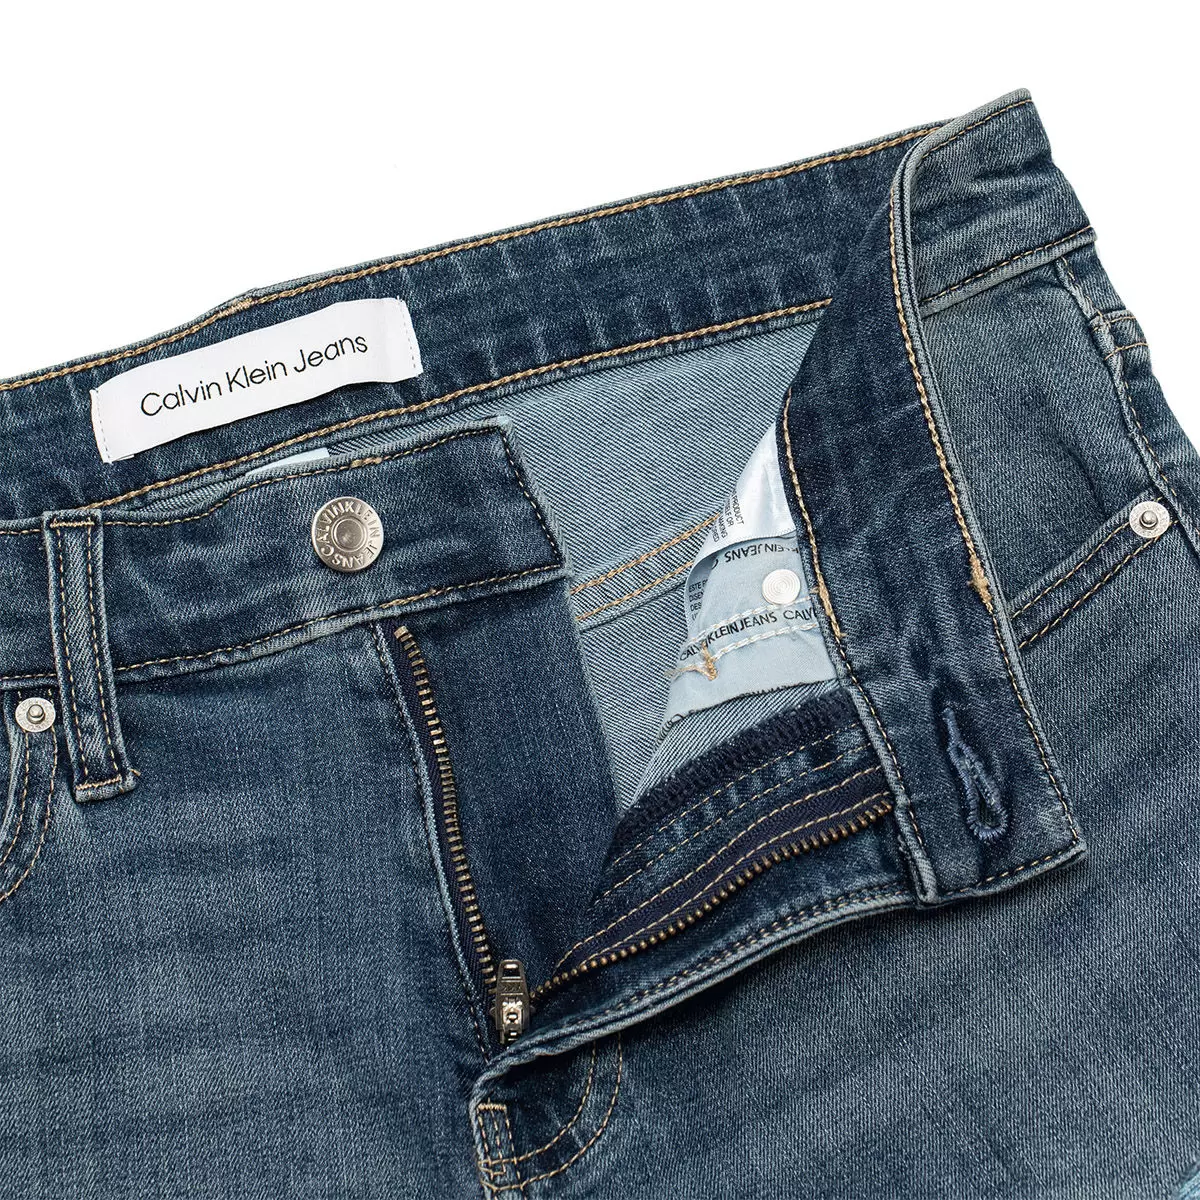 Calvin Klein Jeans 男彈性修身牛仔褲 腰圍 30吋 X 褲長 32吋